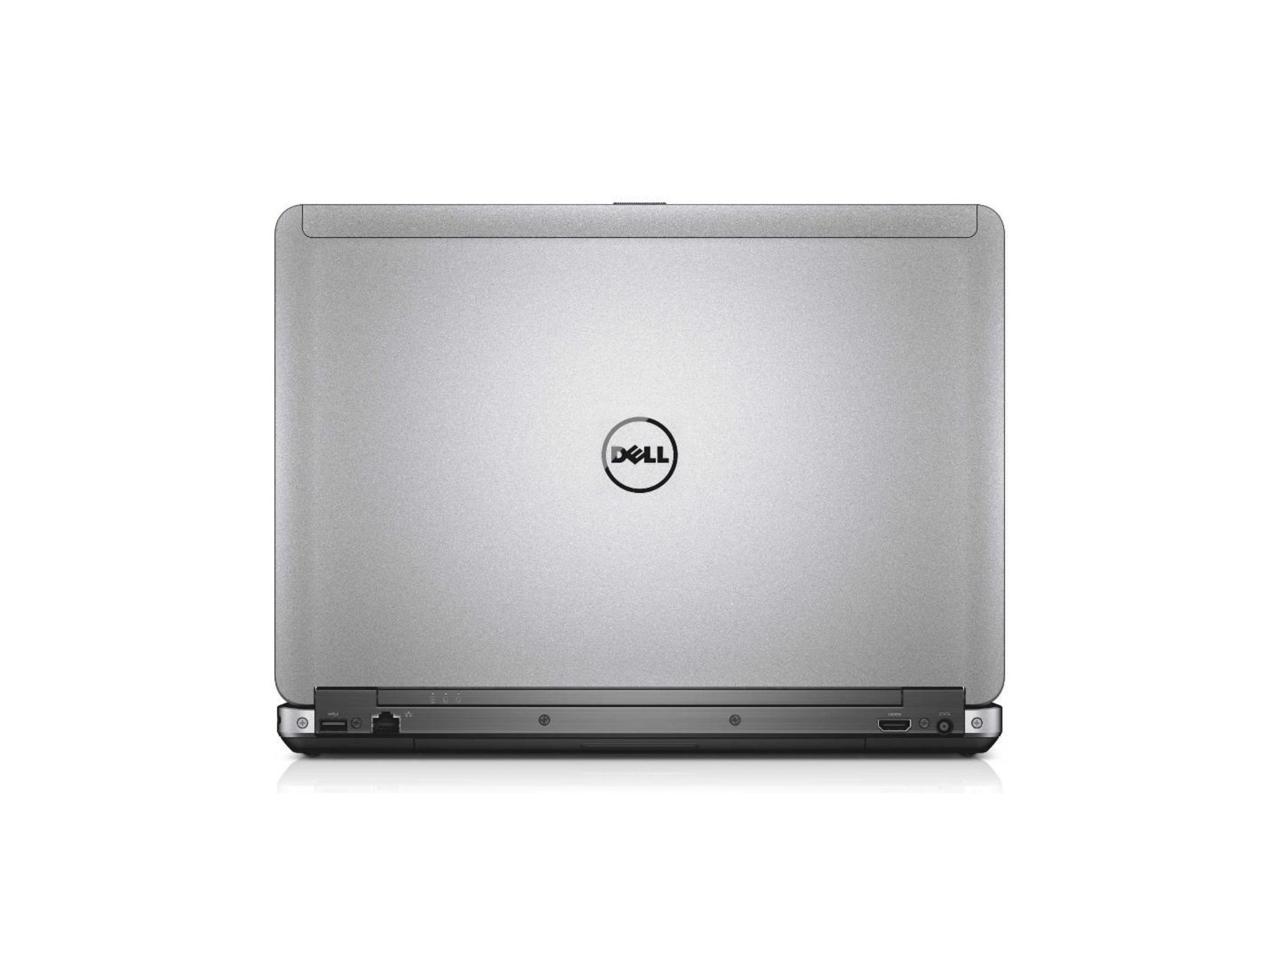 Dell Latitude E6440 14.0 in Laptop - Intel Core i5 4300M 4th Gen 2.6 GHz 4GB 500GB HDD DVD-ROM Windows 10 Pro 64-Bit - Webcam